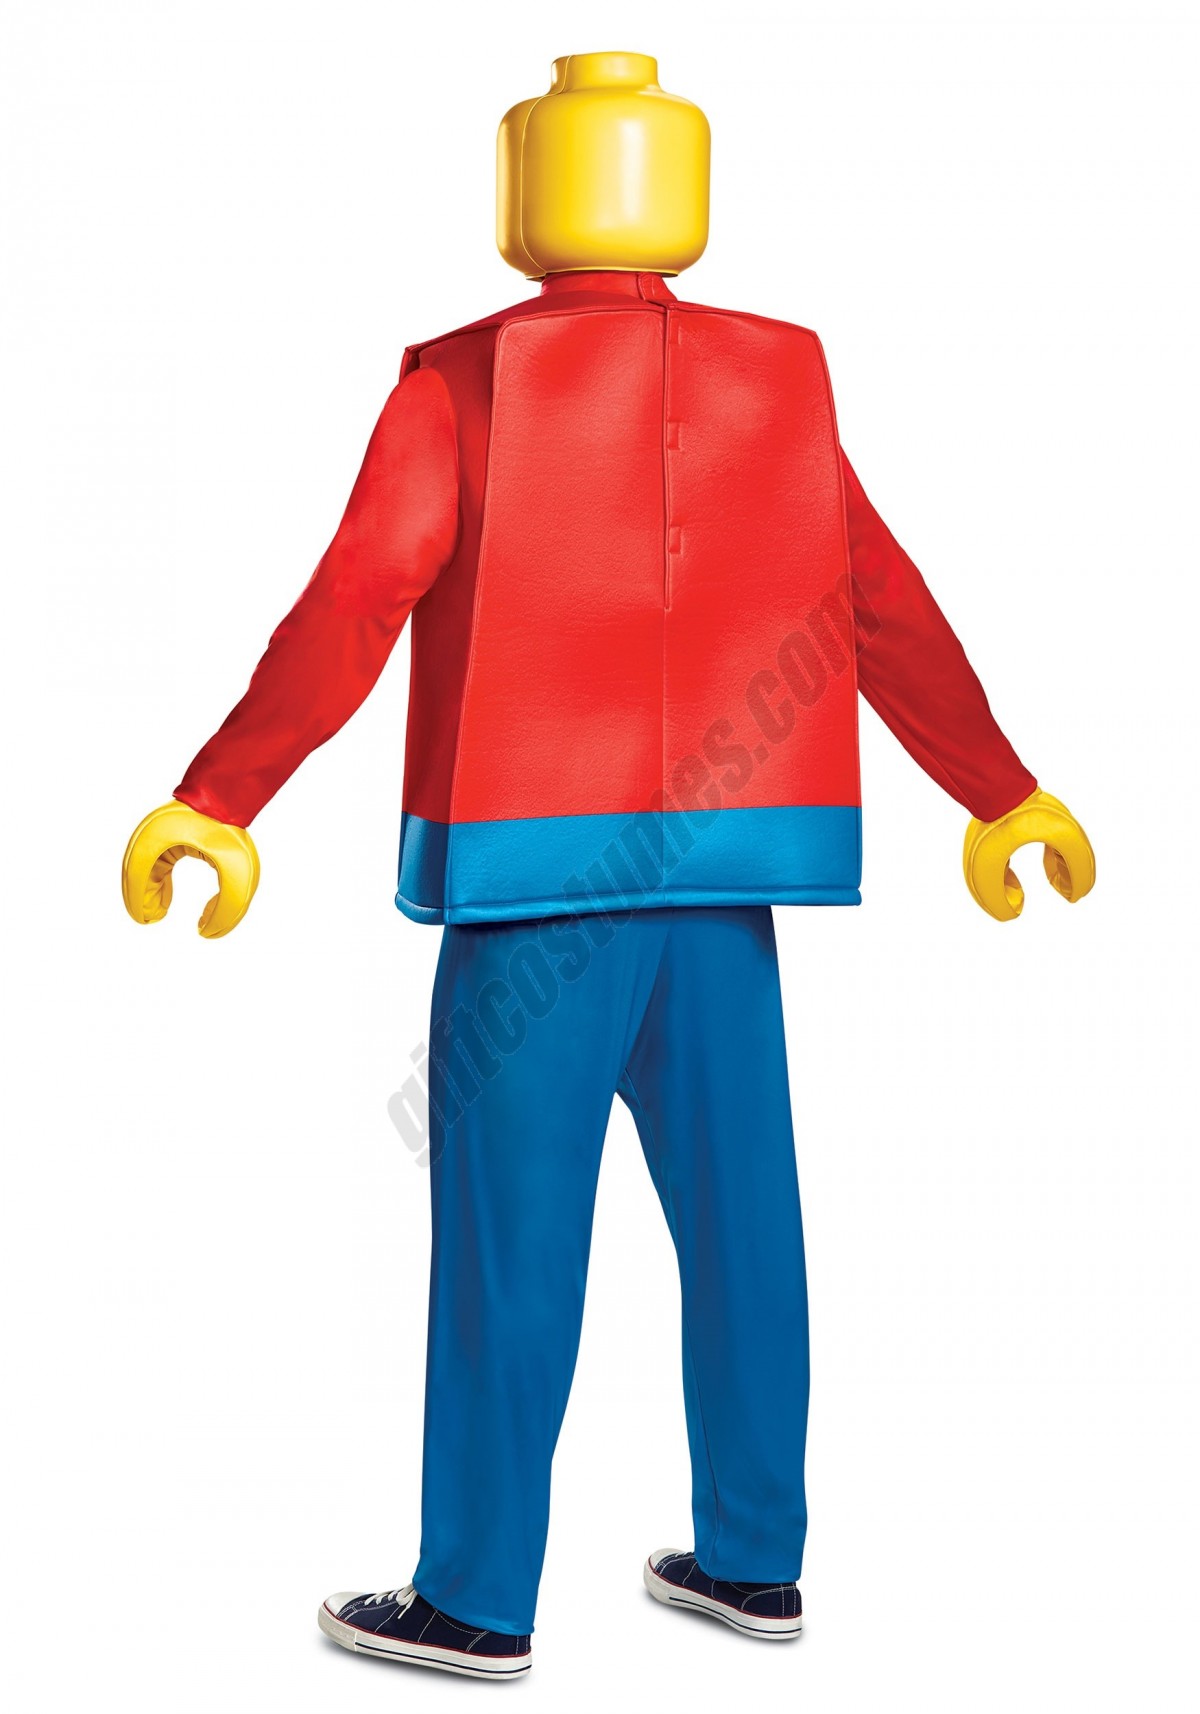 Deluxe LEGO Adult Lego Guy Costume - Women's - -1